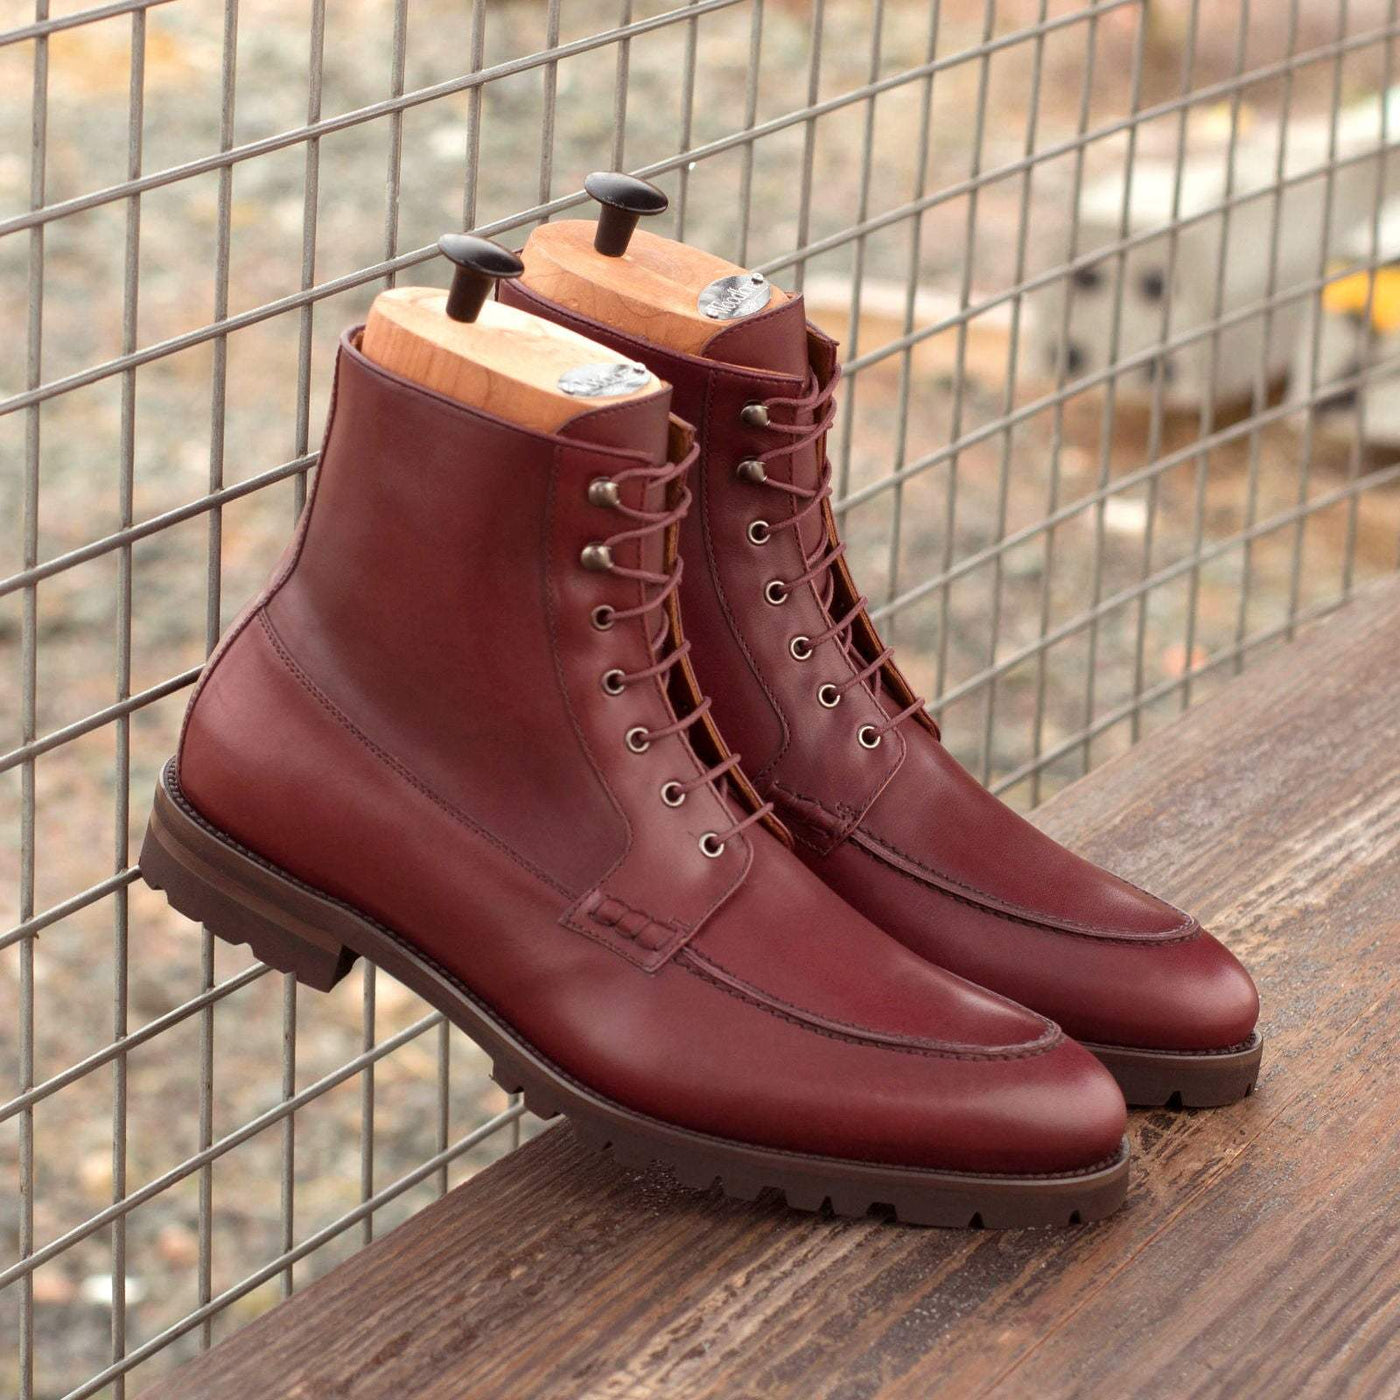 Men's Moc Boots Leather Burgundy 4040 1- MERRIMIUM--GID-3145-4040